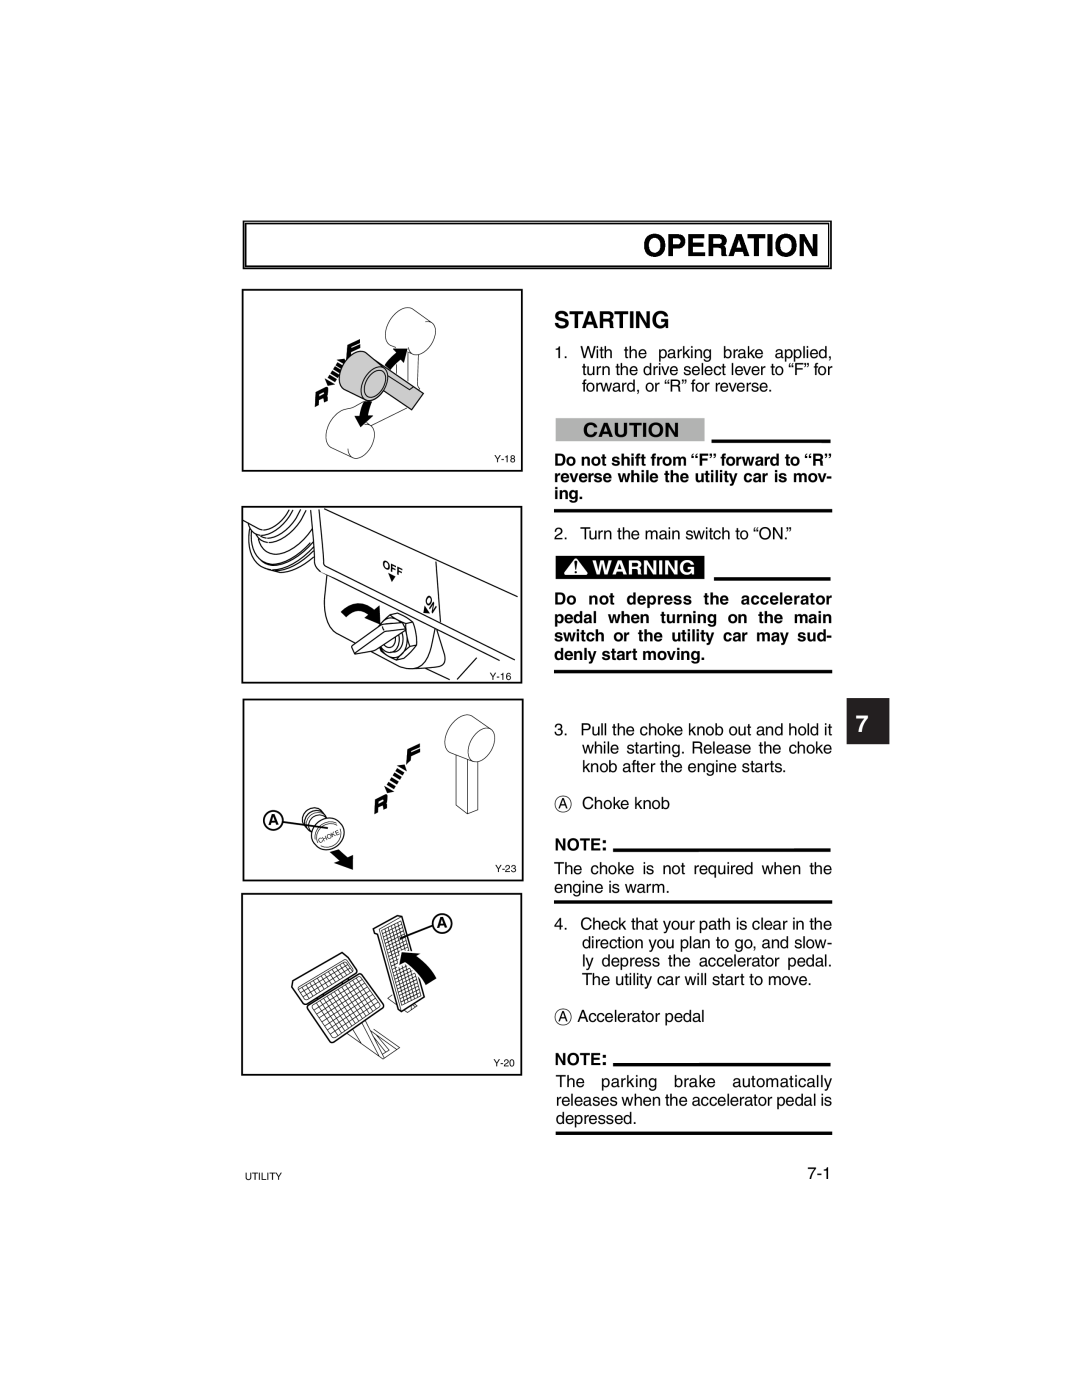 Yamaha G21A manual Operation, Starting 